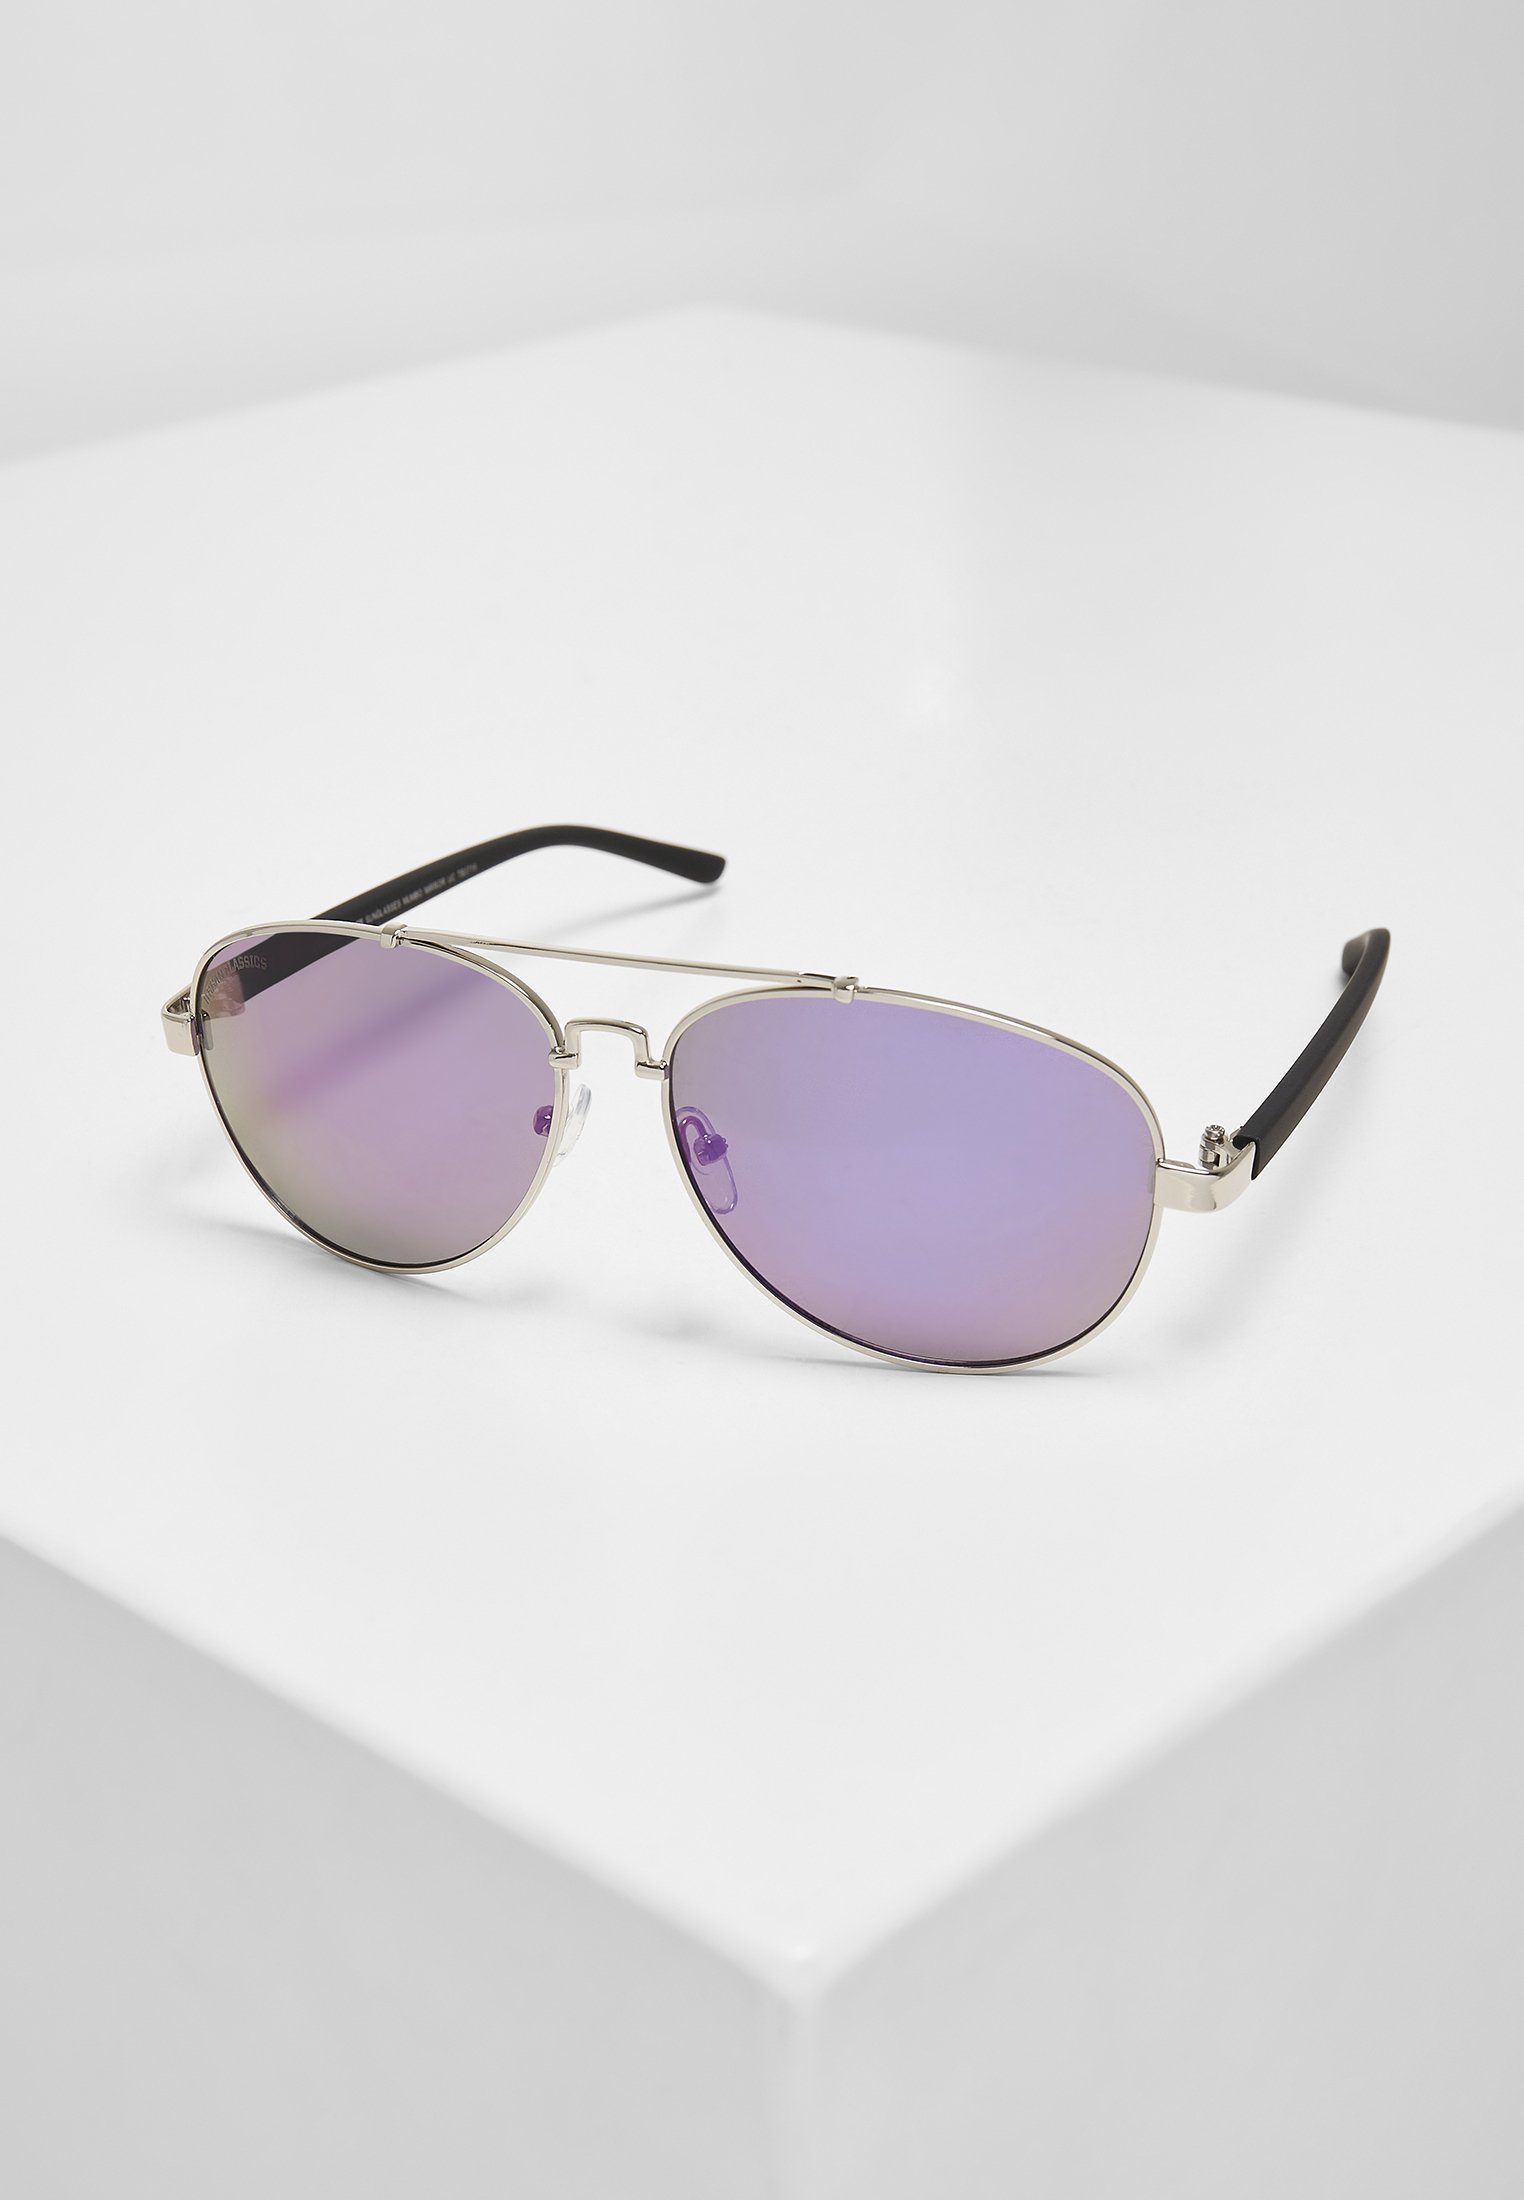 Mumbo UC Sunglasses URBAN silver/purple Sonnenbrille Mirror CLASSICS Accessoires